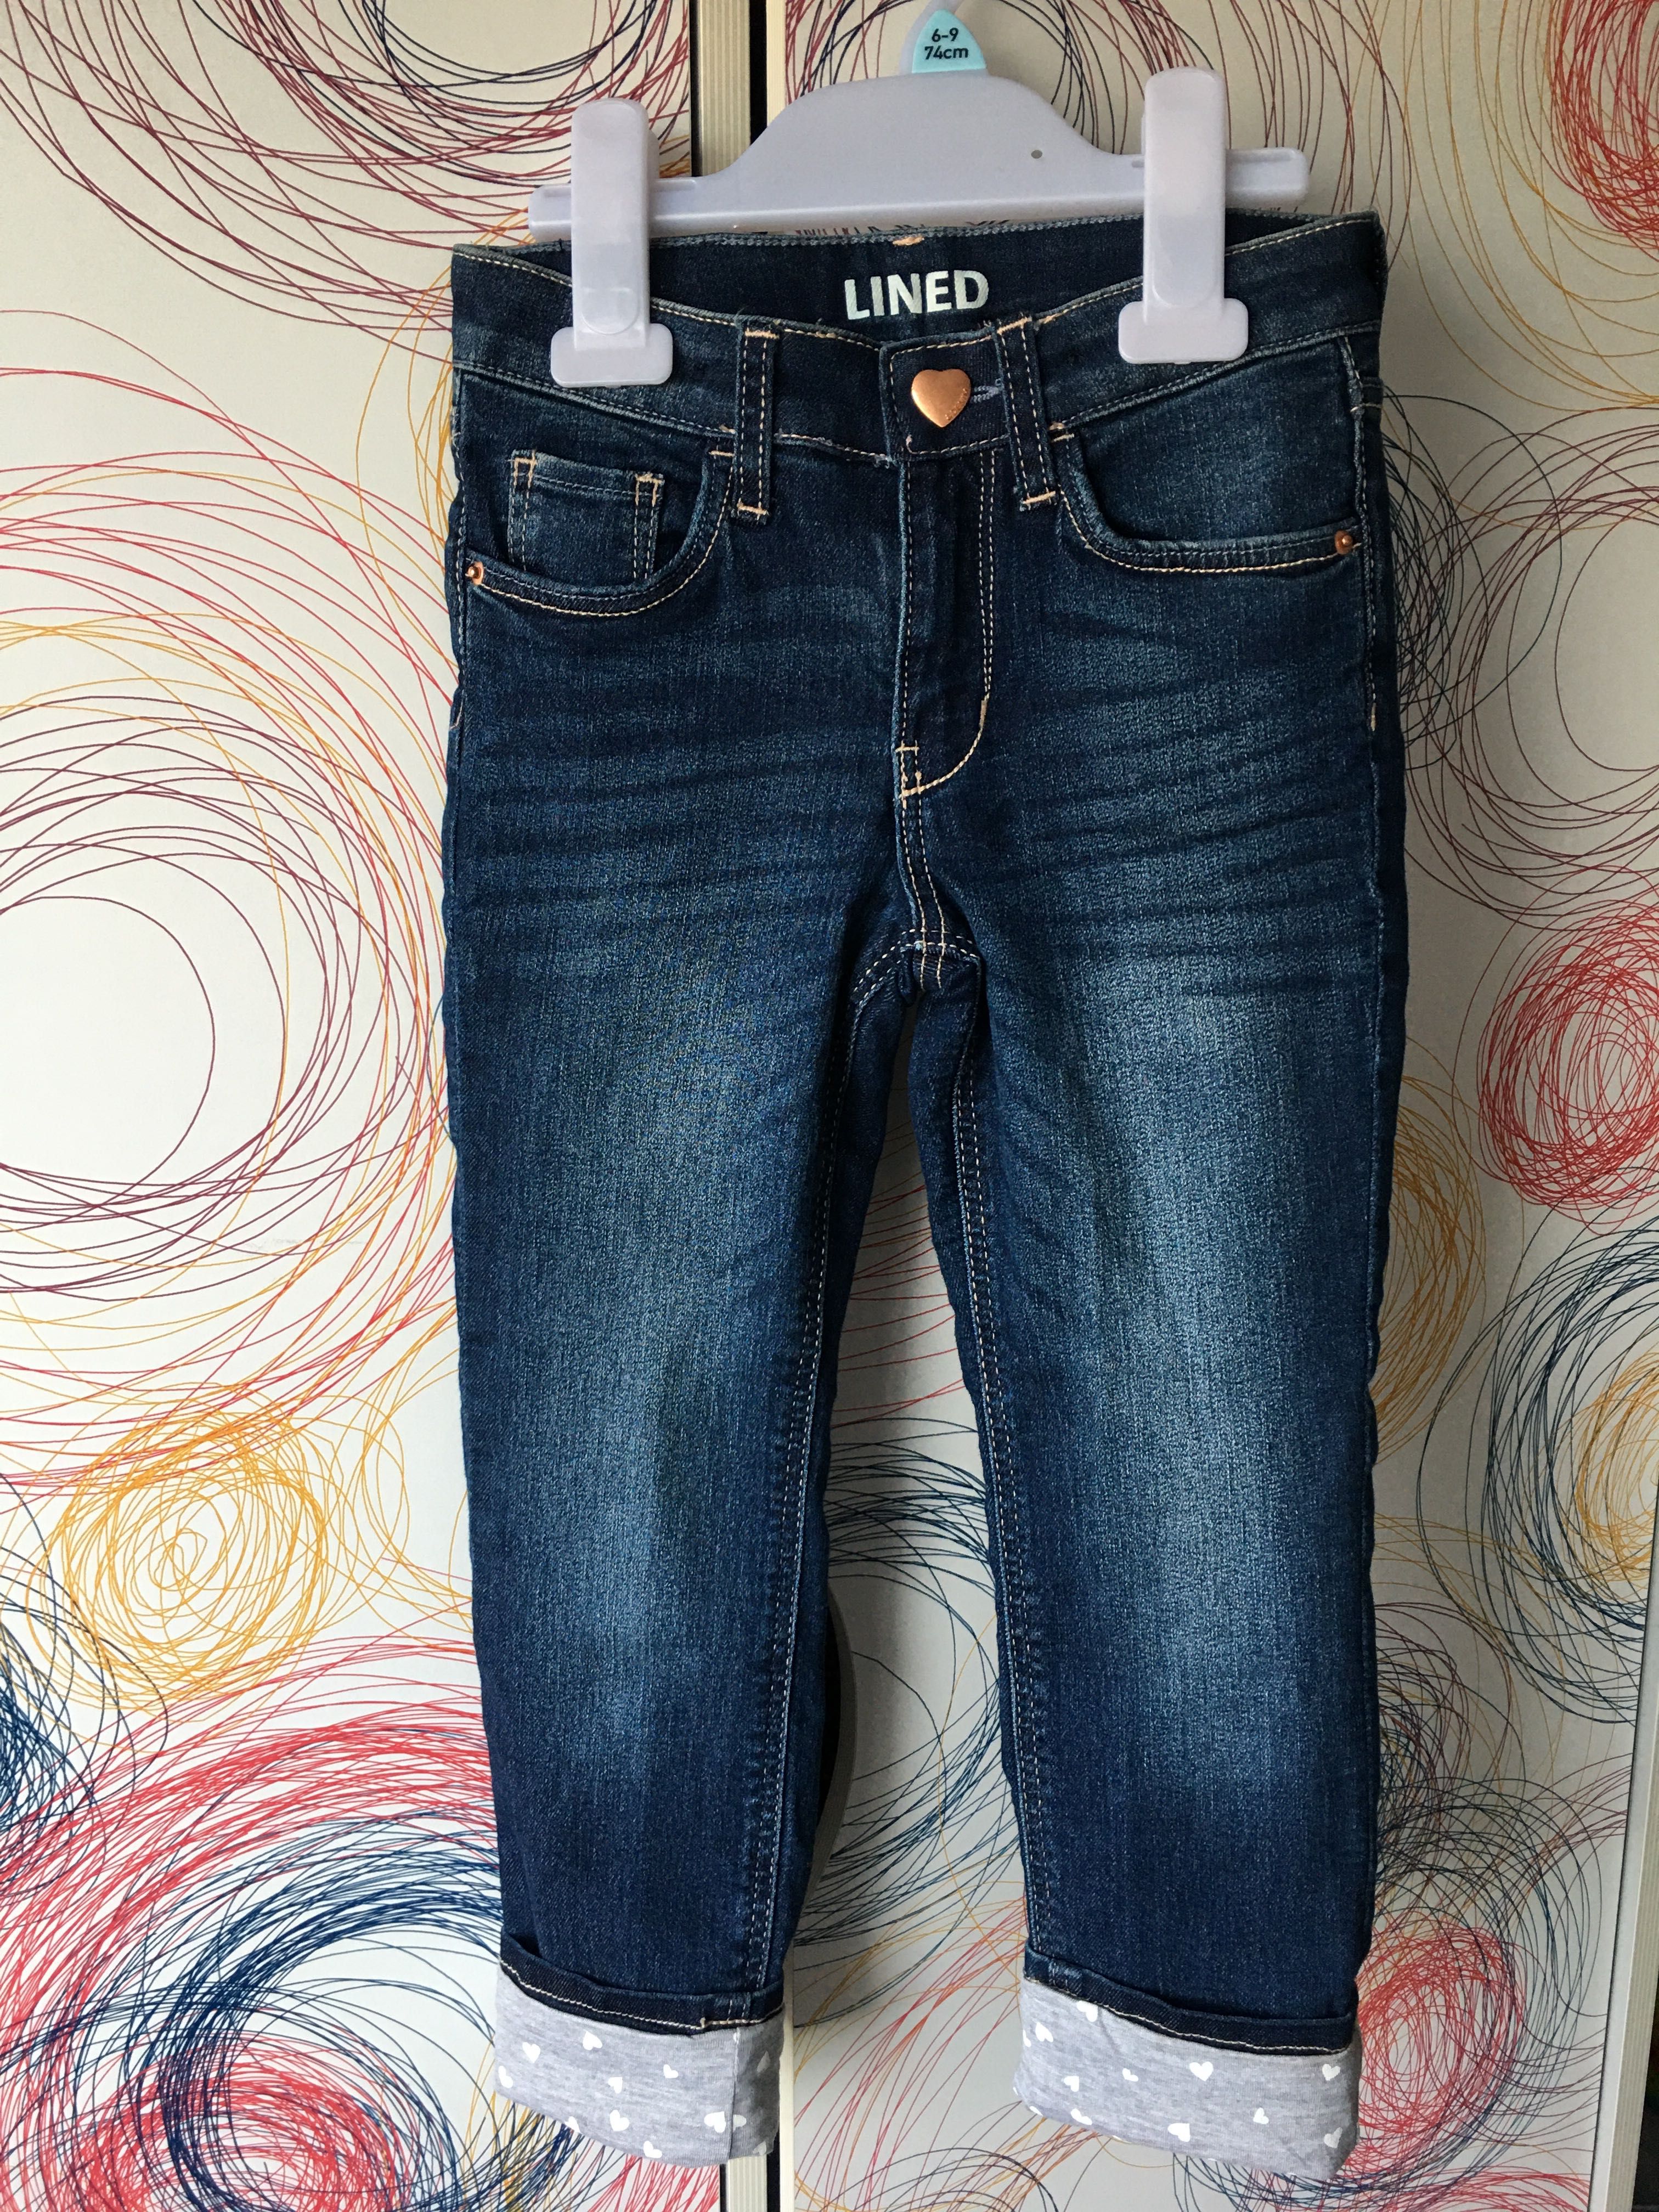 Dżinsy jeansy slim fit lined jeans H&M r. 110, nowe bez metki